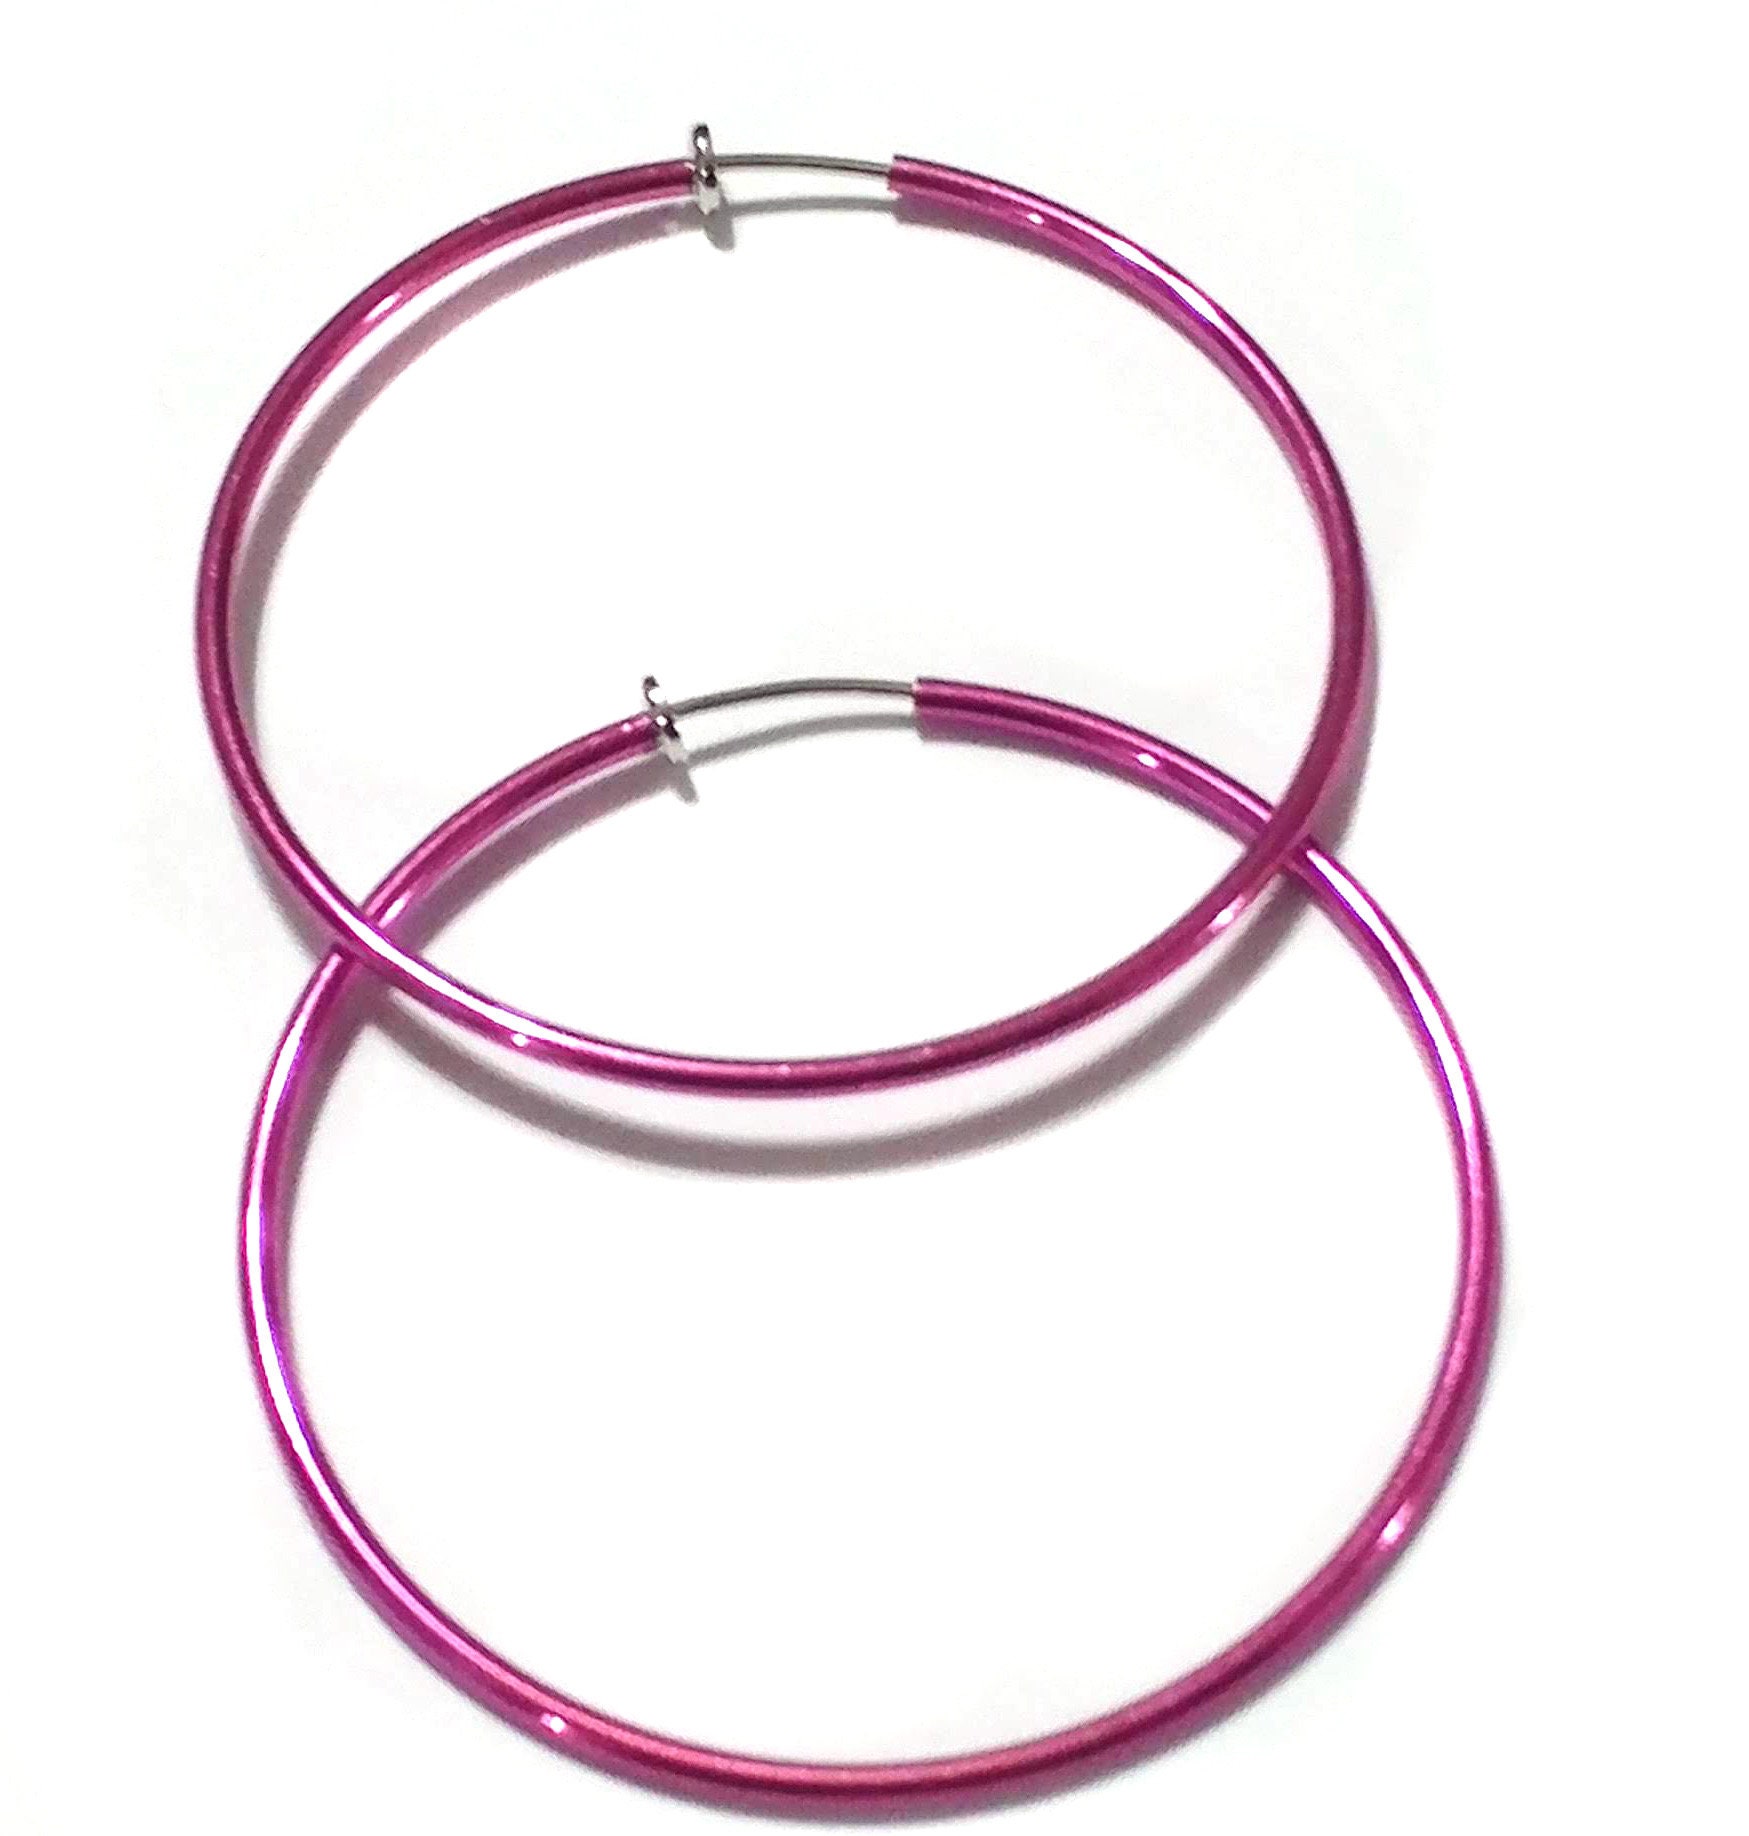 Aggregate more than 204 hot pink hoop earrings